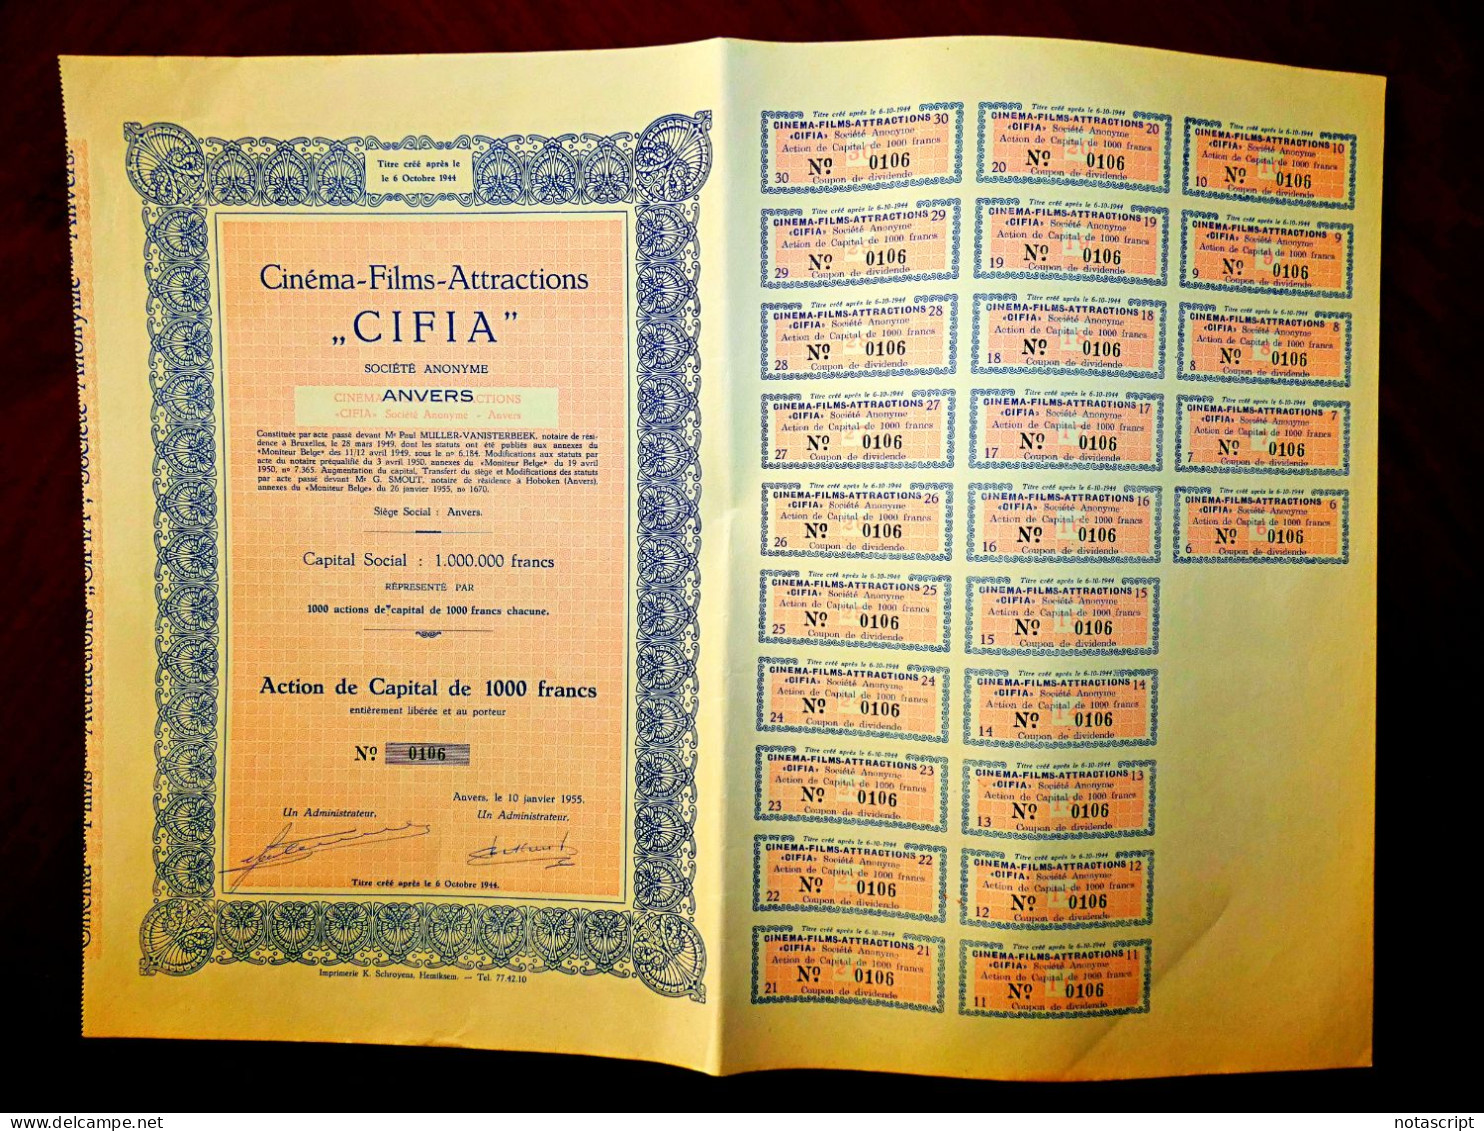 Cinéma Films Attractions CIFIA, Anvers 1955 Belgium  Sharecertificate - Cine & Teatro